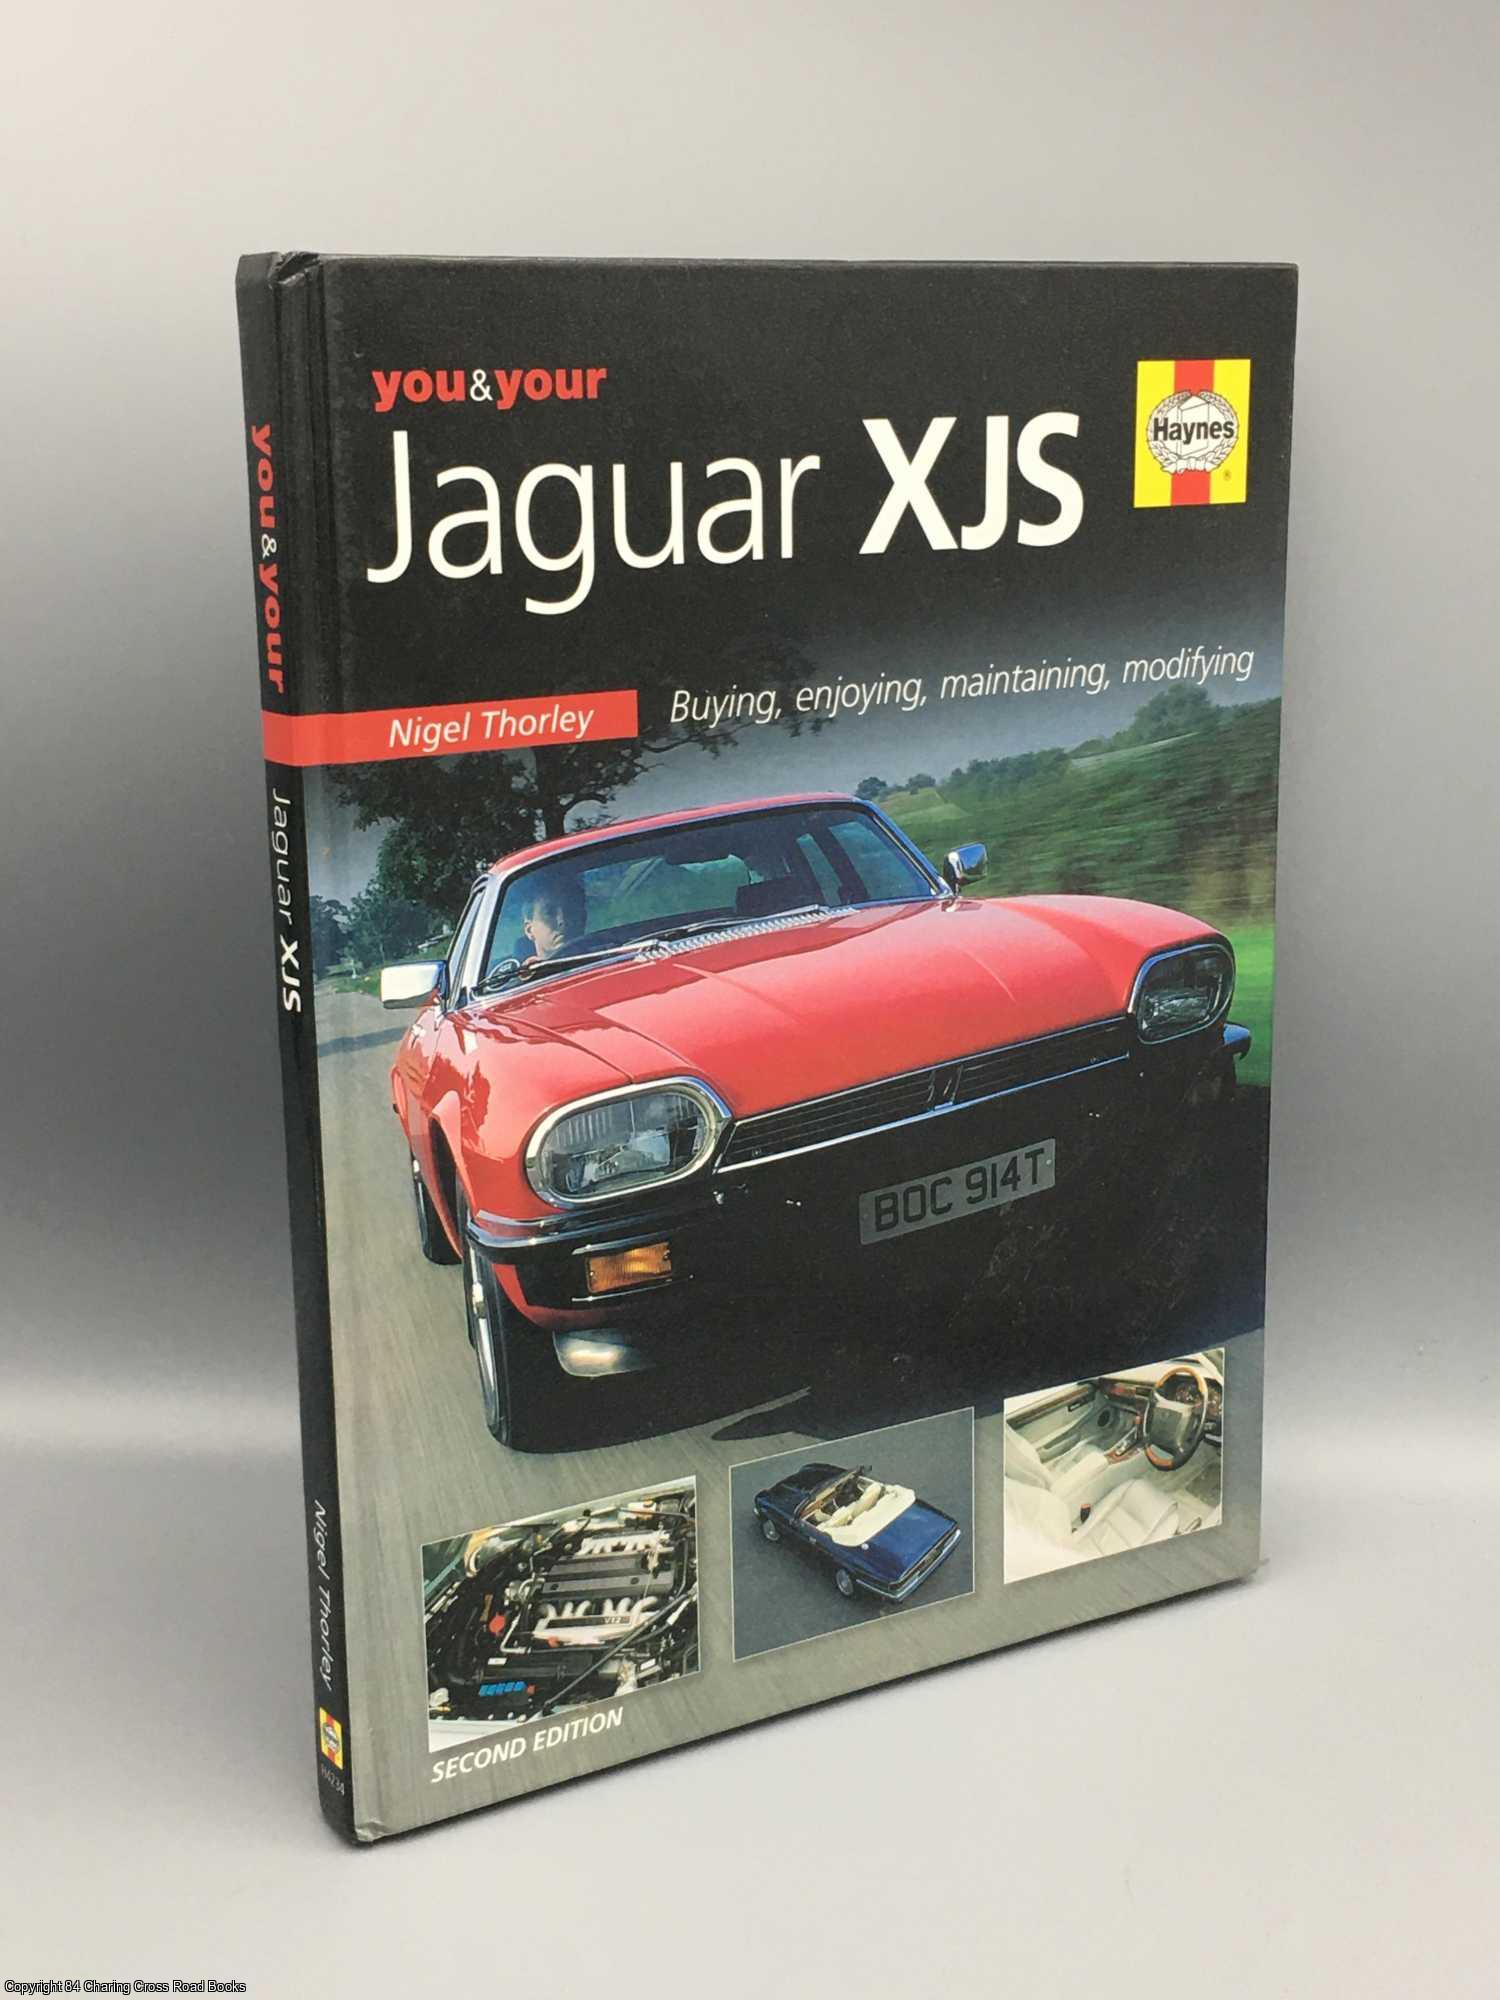 Thorley, Nigel - You & Your Jaguar XJS: buying, enjoying, maintaining, modifying